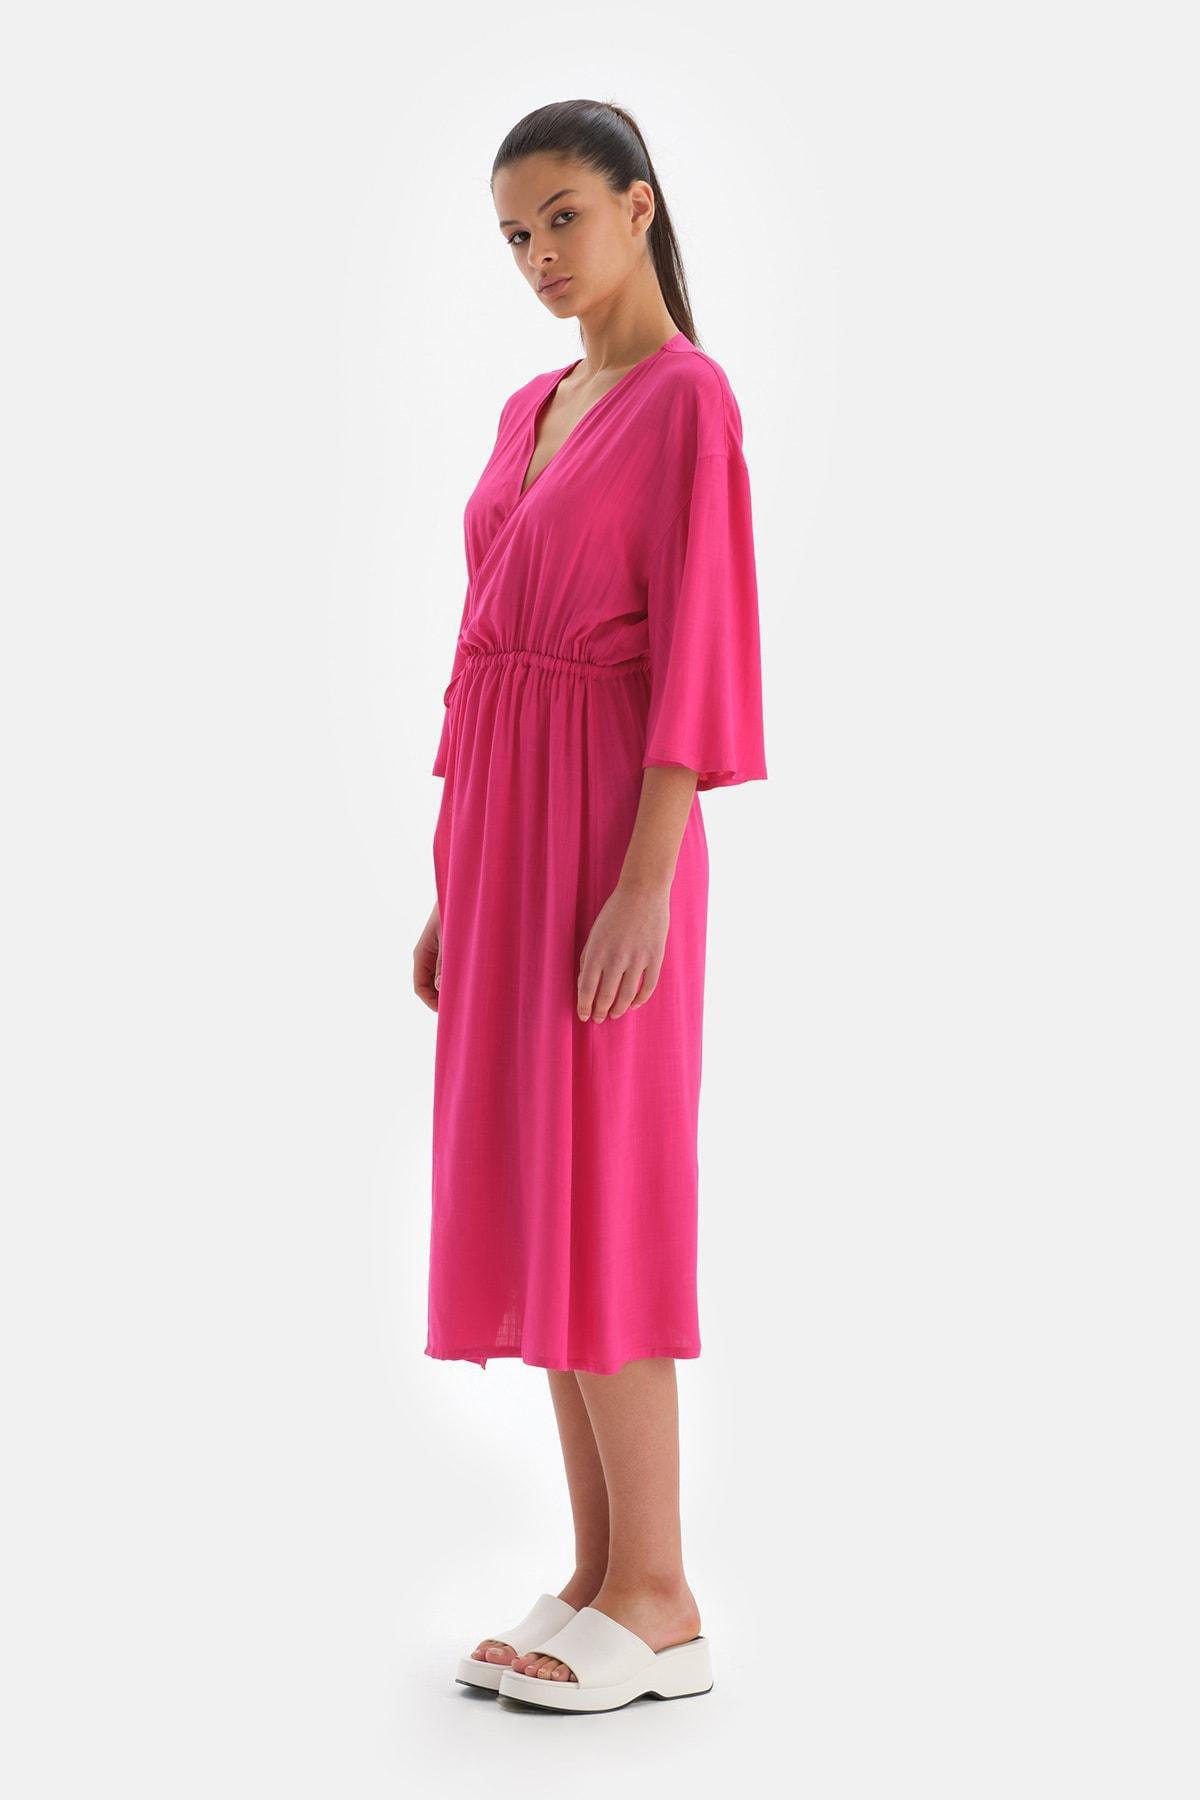 Dagi - Pink Robe Dress